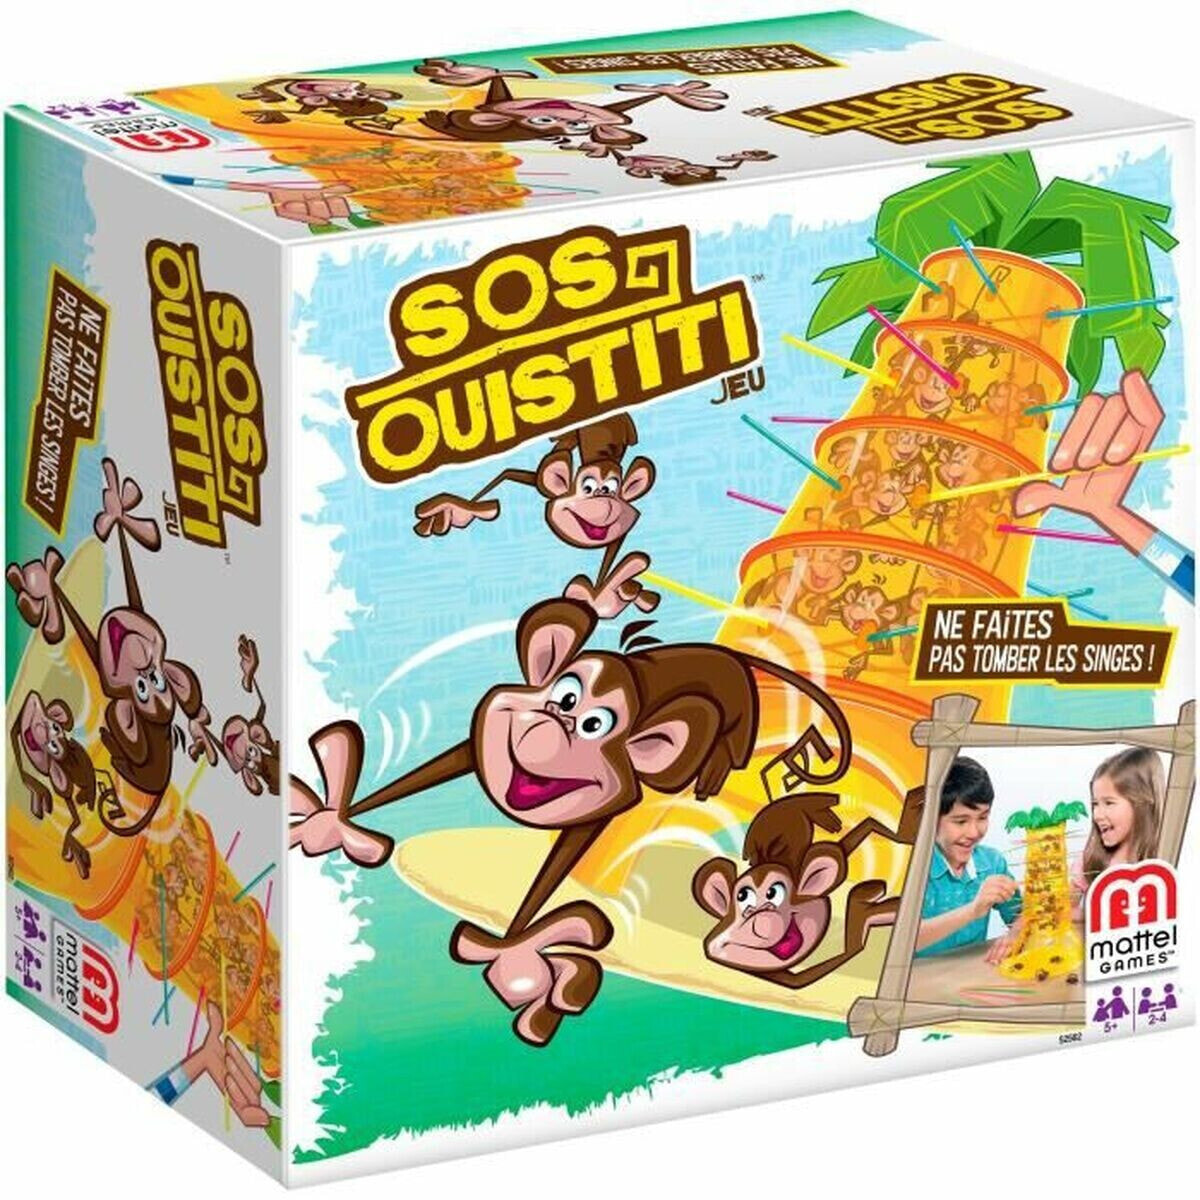 Board game Monos Locos Mattel 52563 26 cm